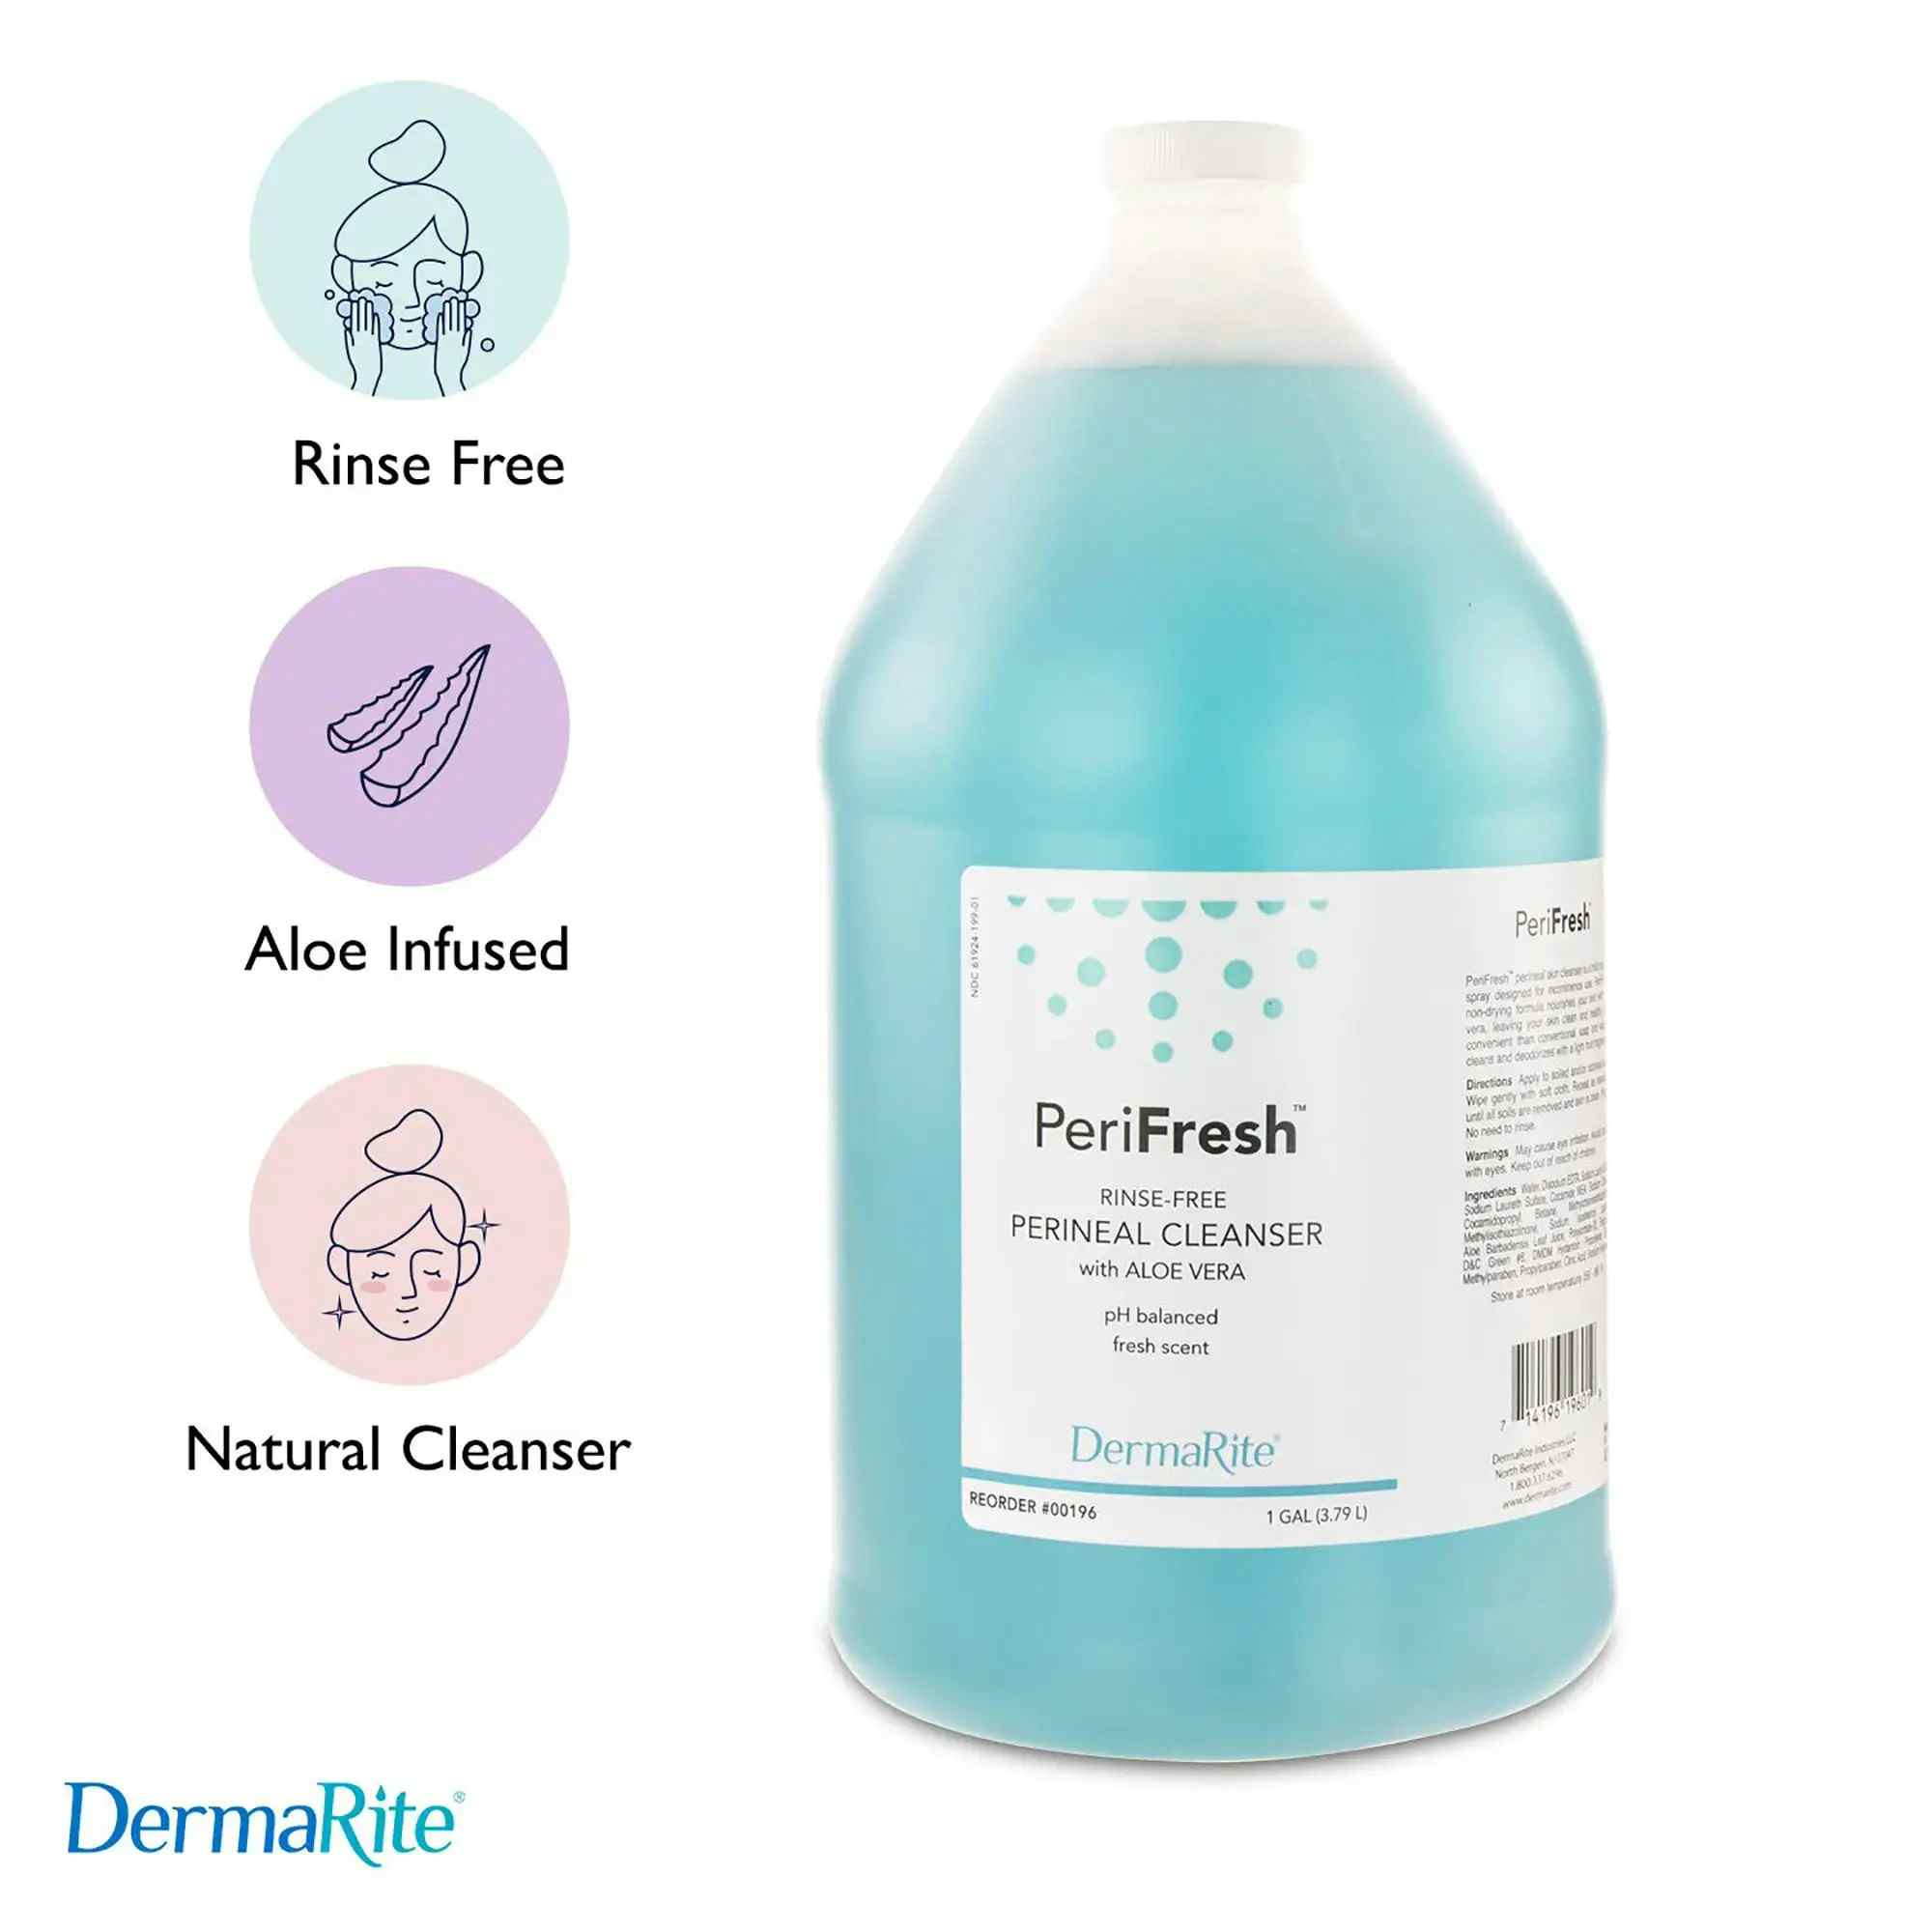 DermaRite PeriFresh Rinse-Free Perineal Cleanser with Aloe Vera, Fresh scent